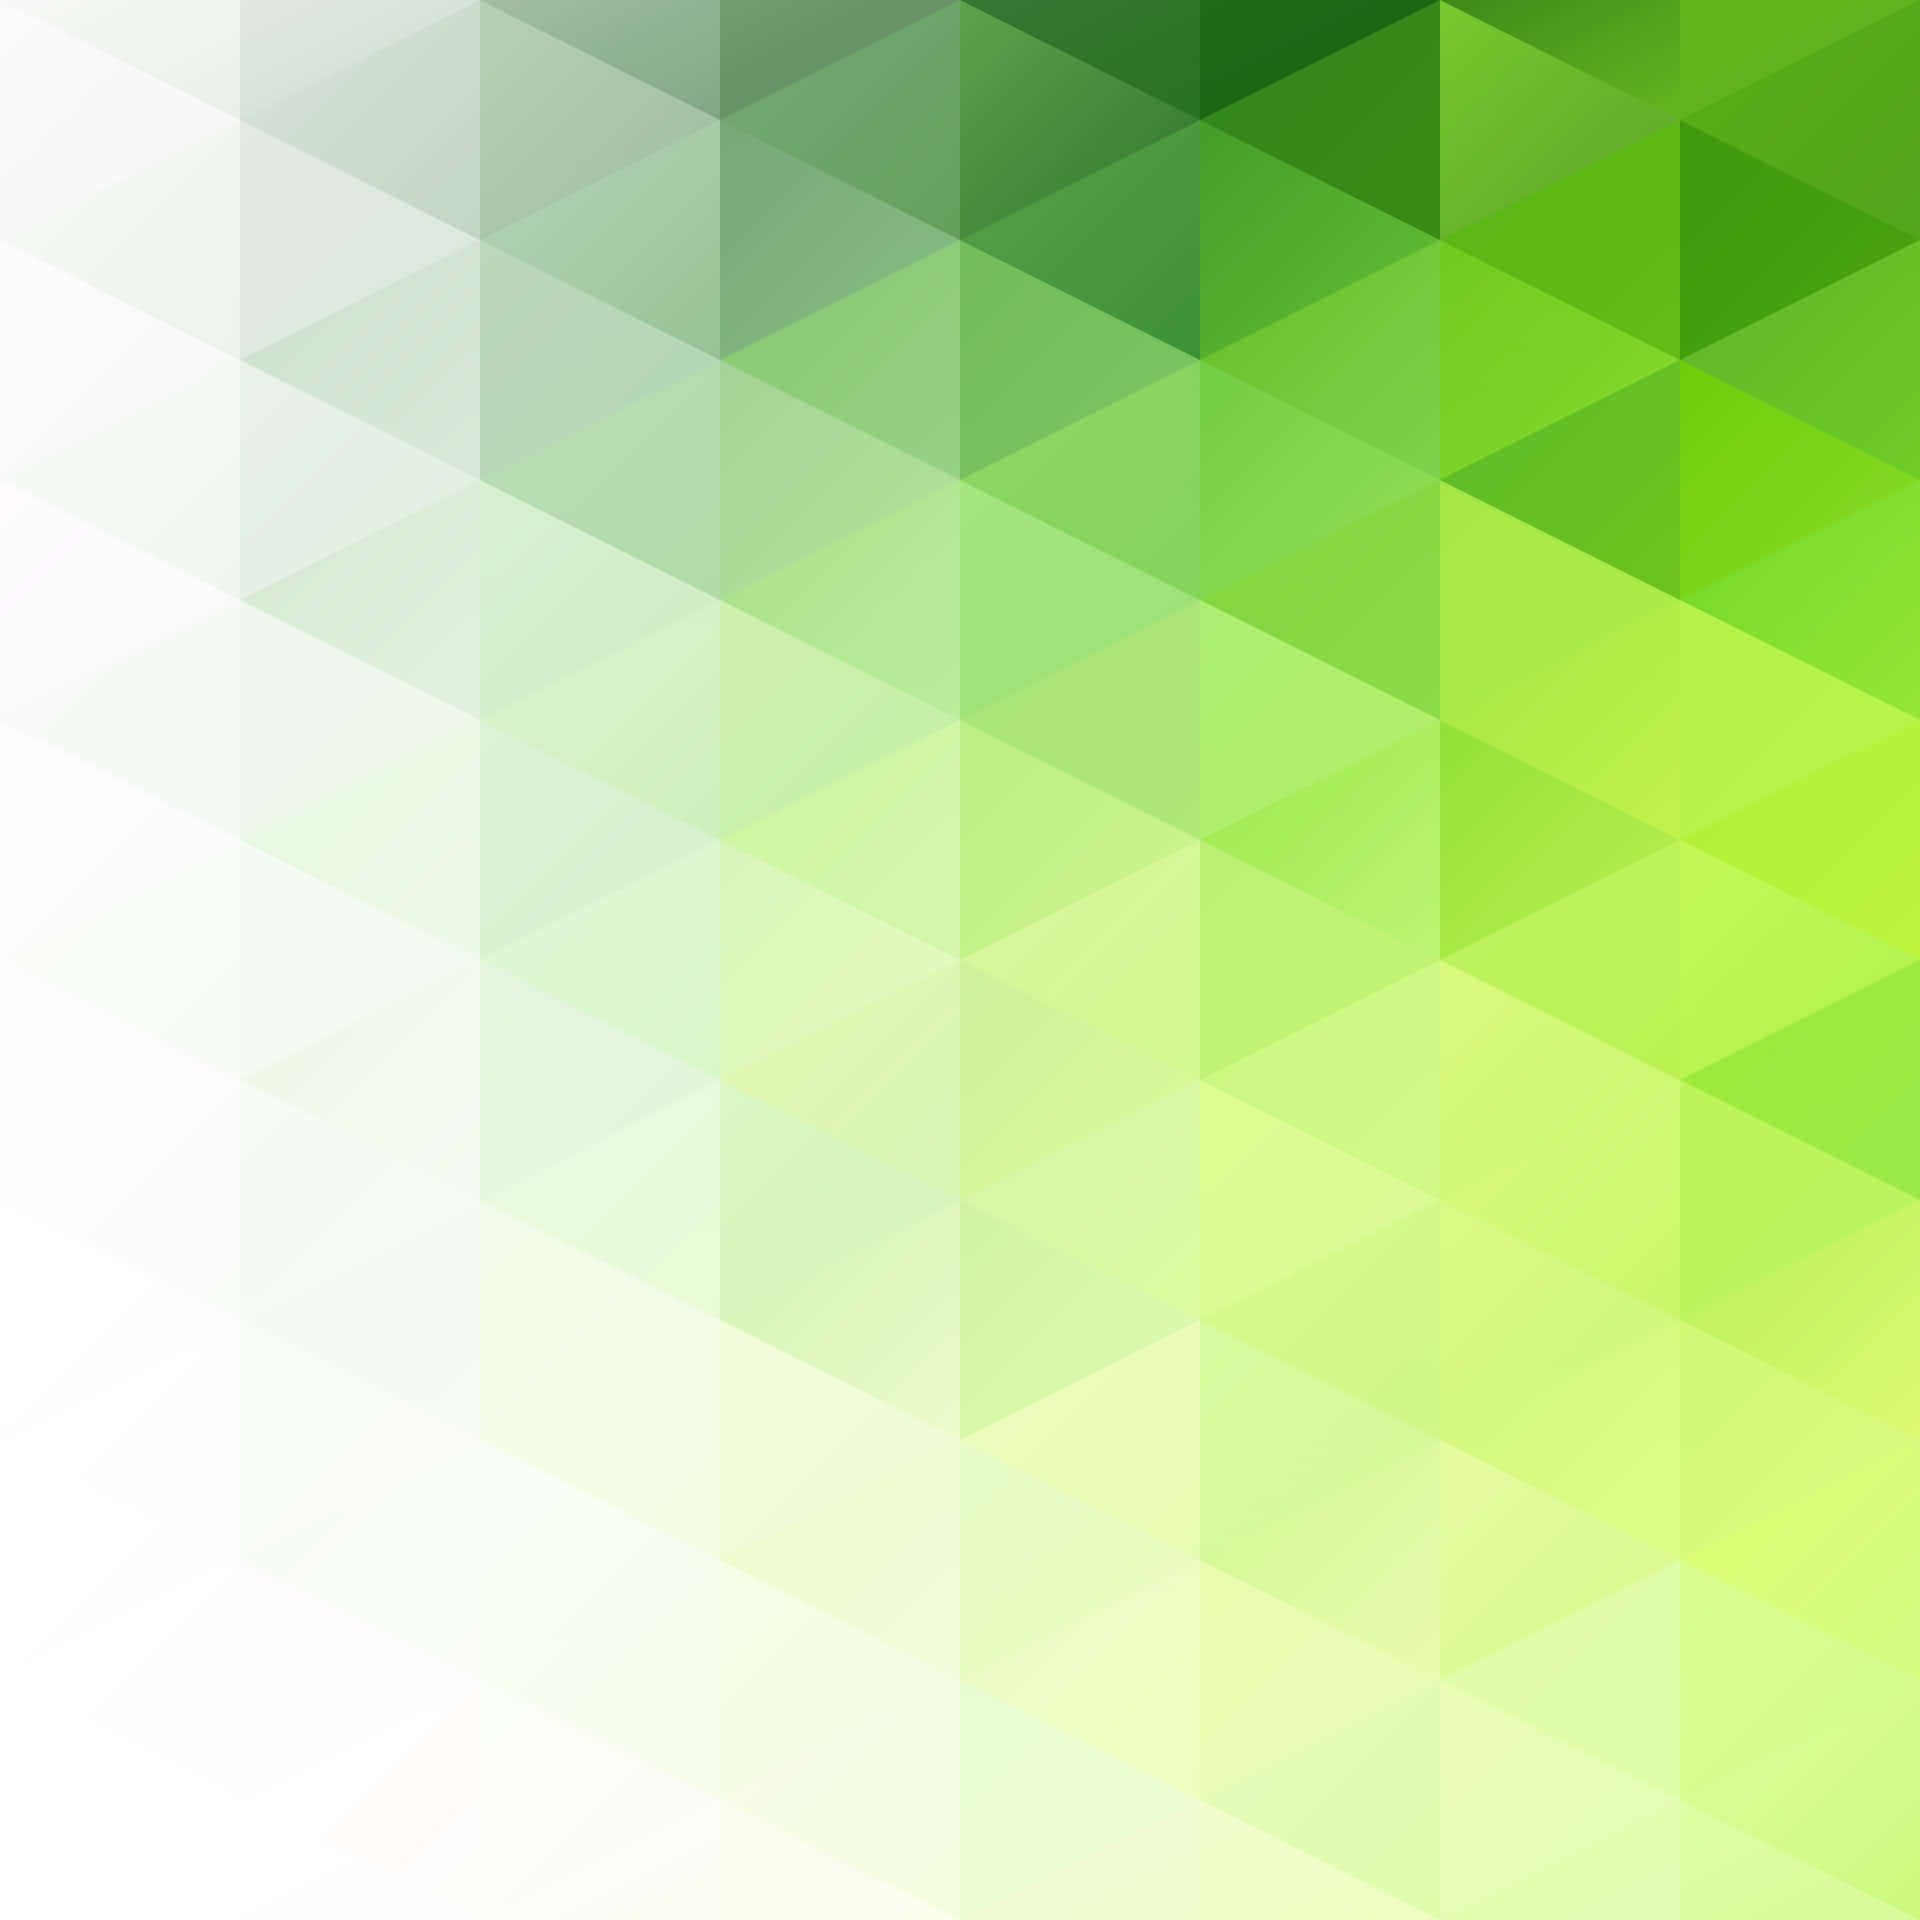 Impresionantepapel Tapiz Geométrico Verde. Fondo de pantalla